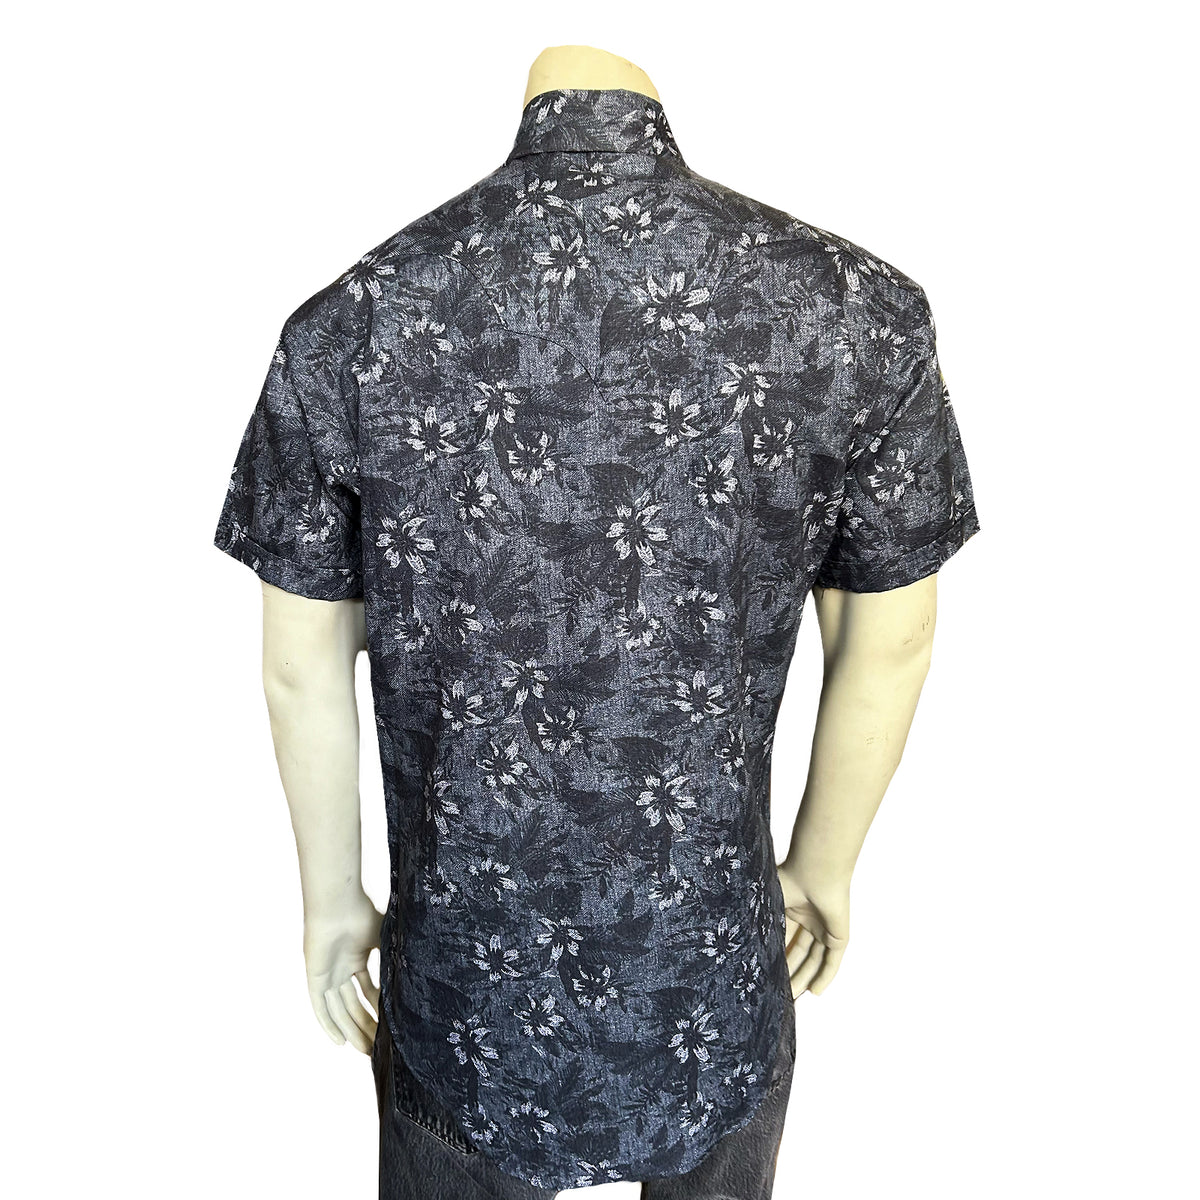 Men’s Black Floral Print Short Sleeve Western Shirt